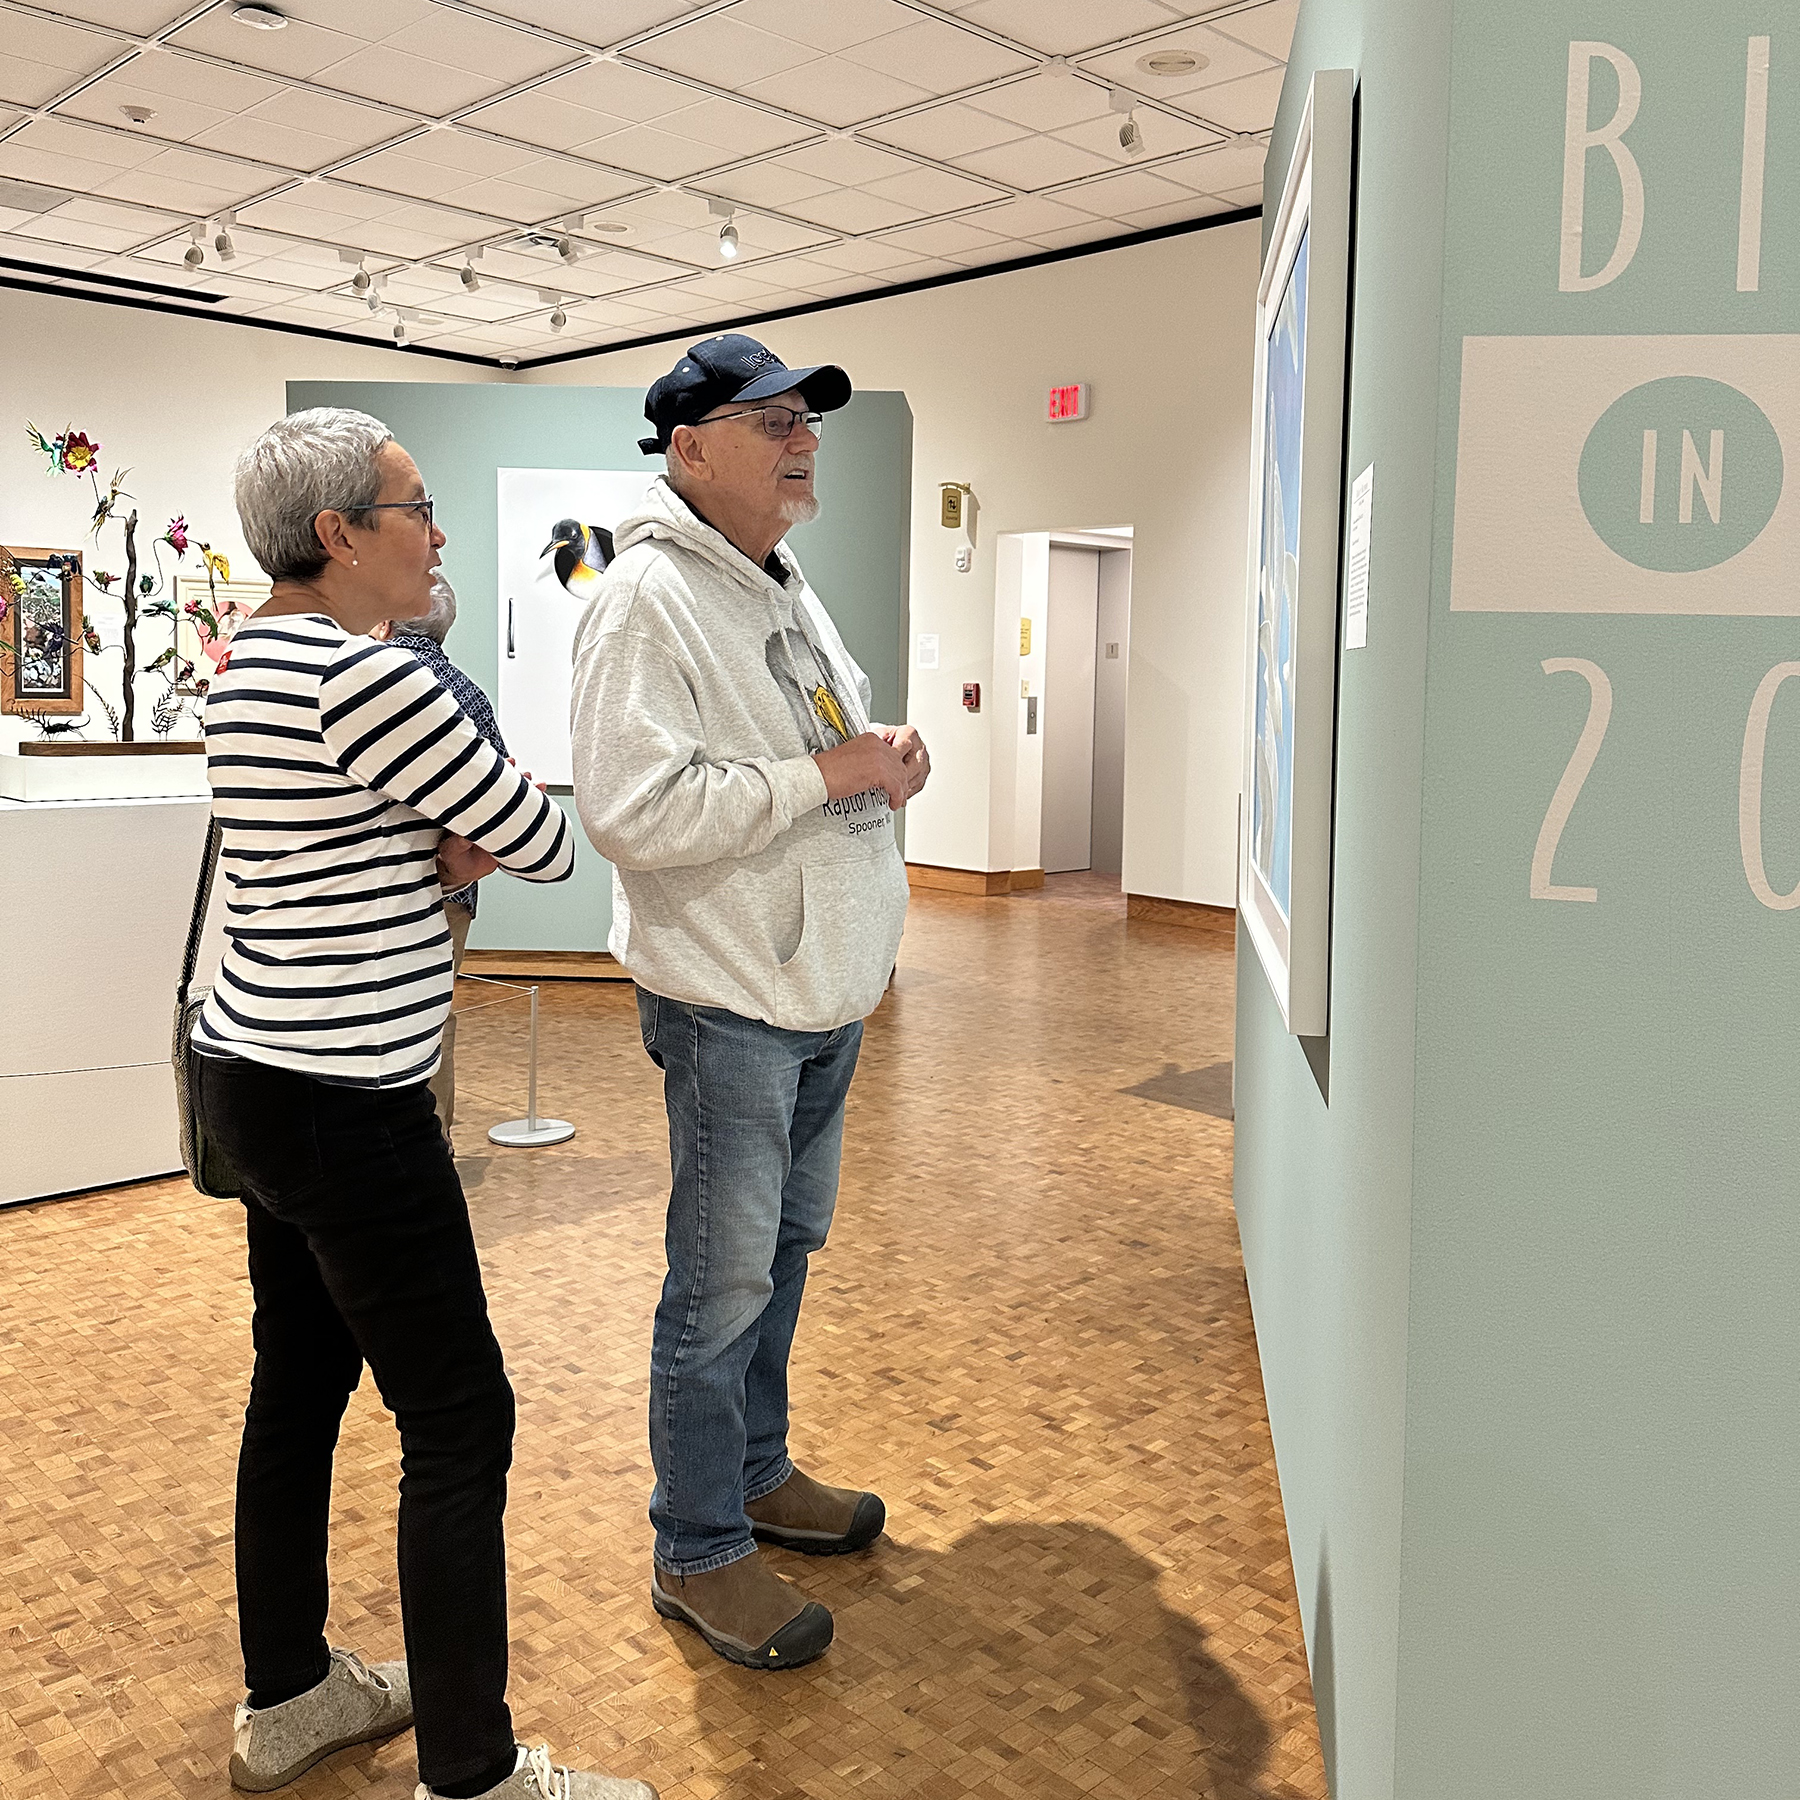 Two visitors enjoy looking at artwork in the Birds in Art galleries